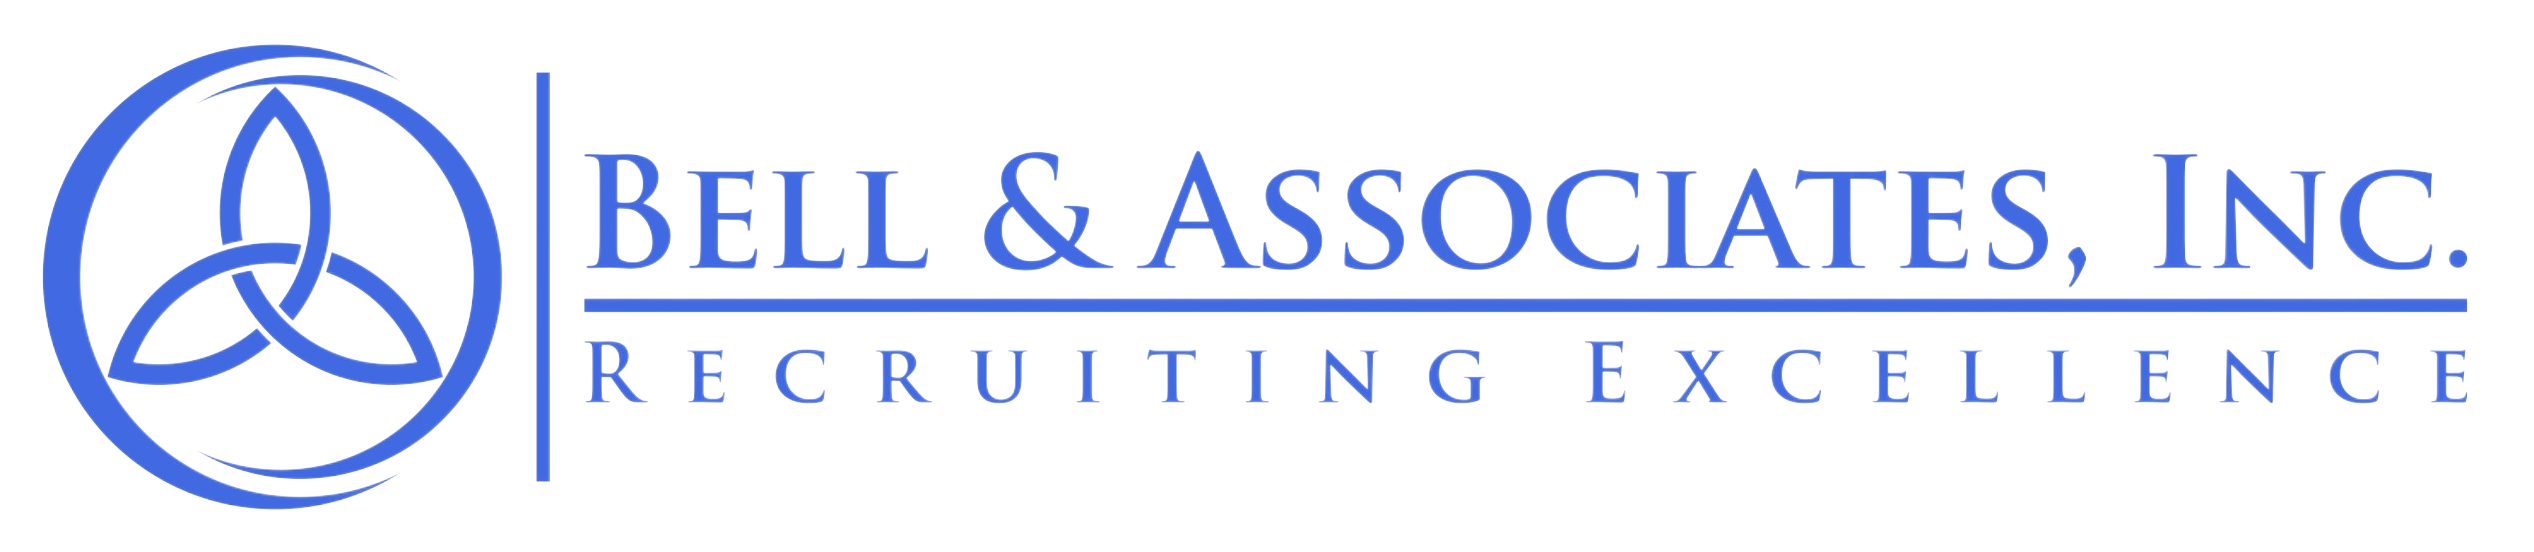 bell and associates logo